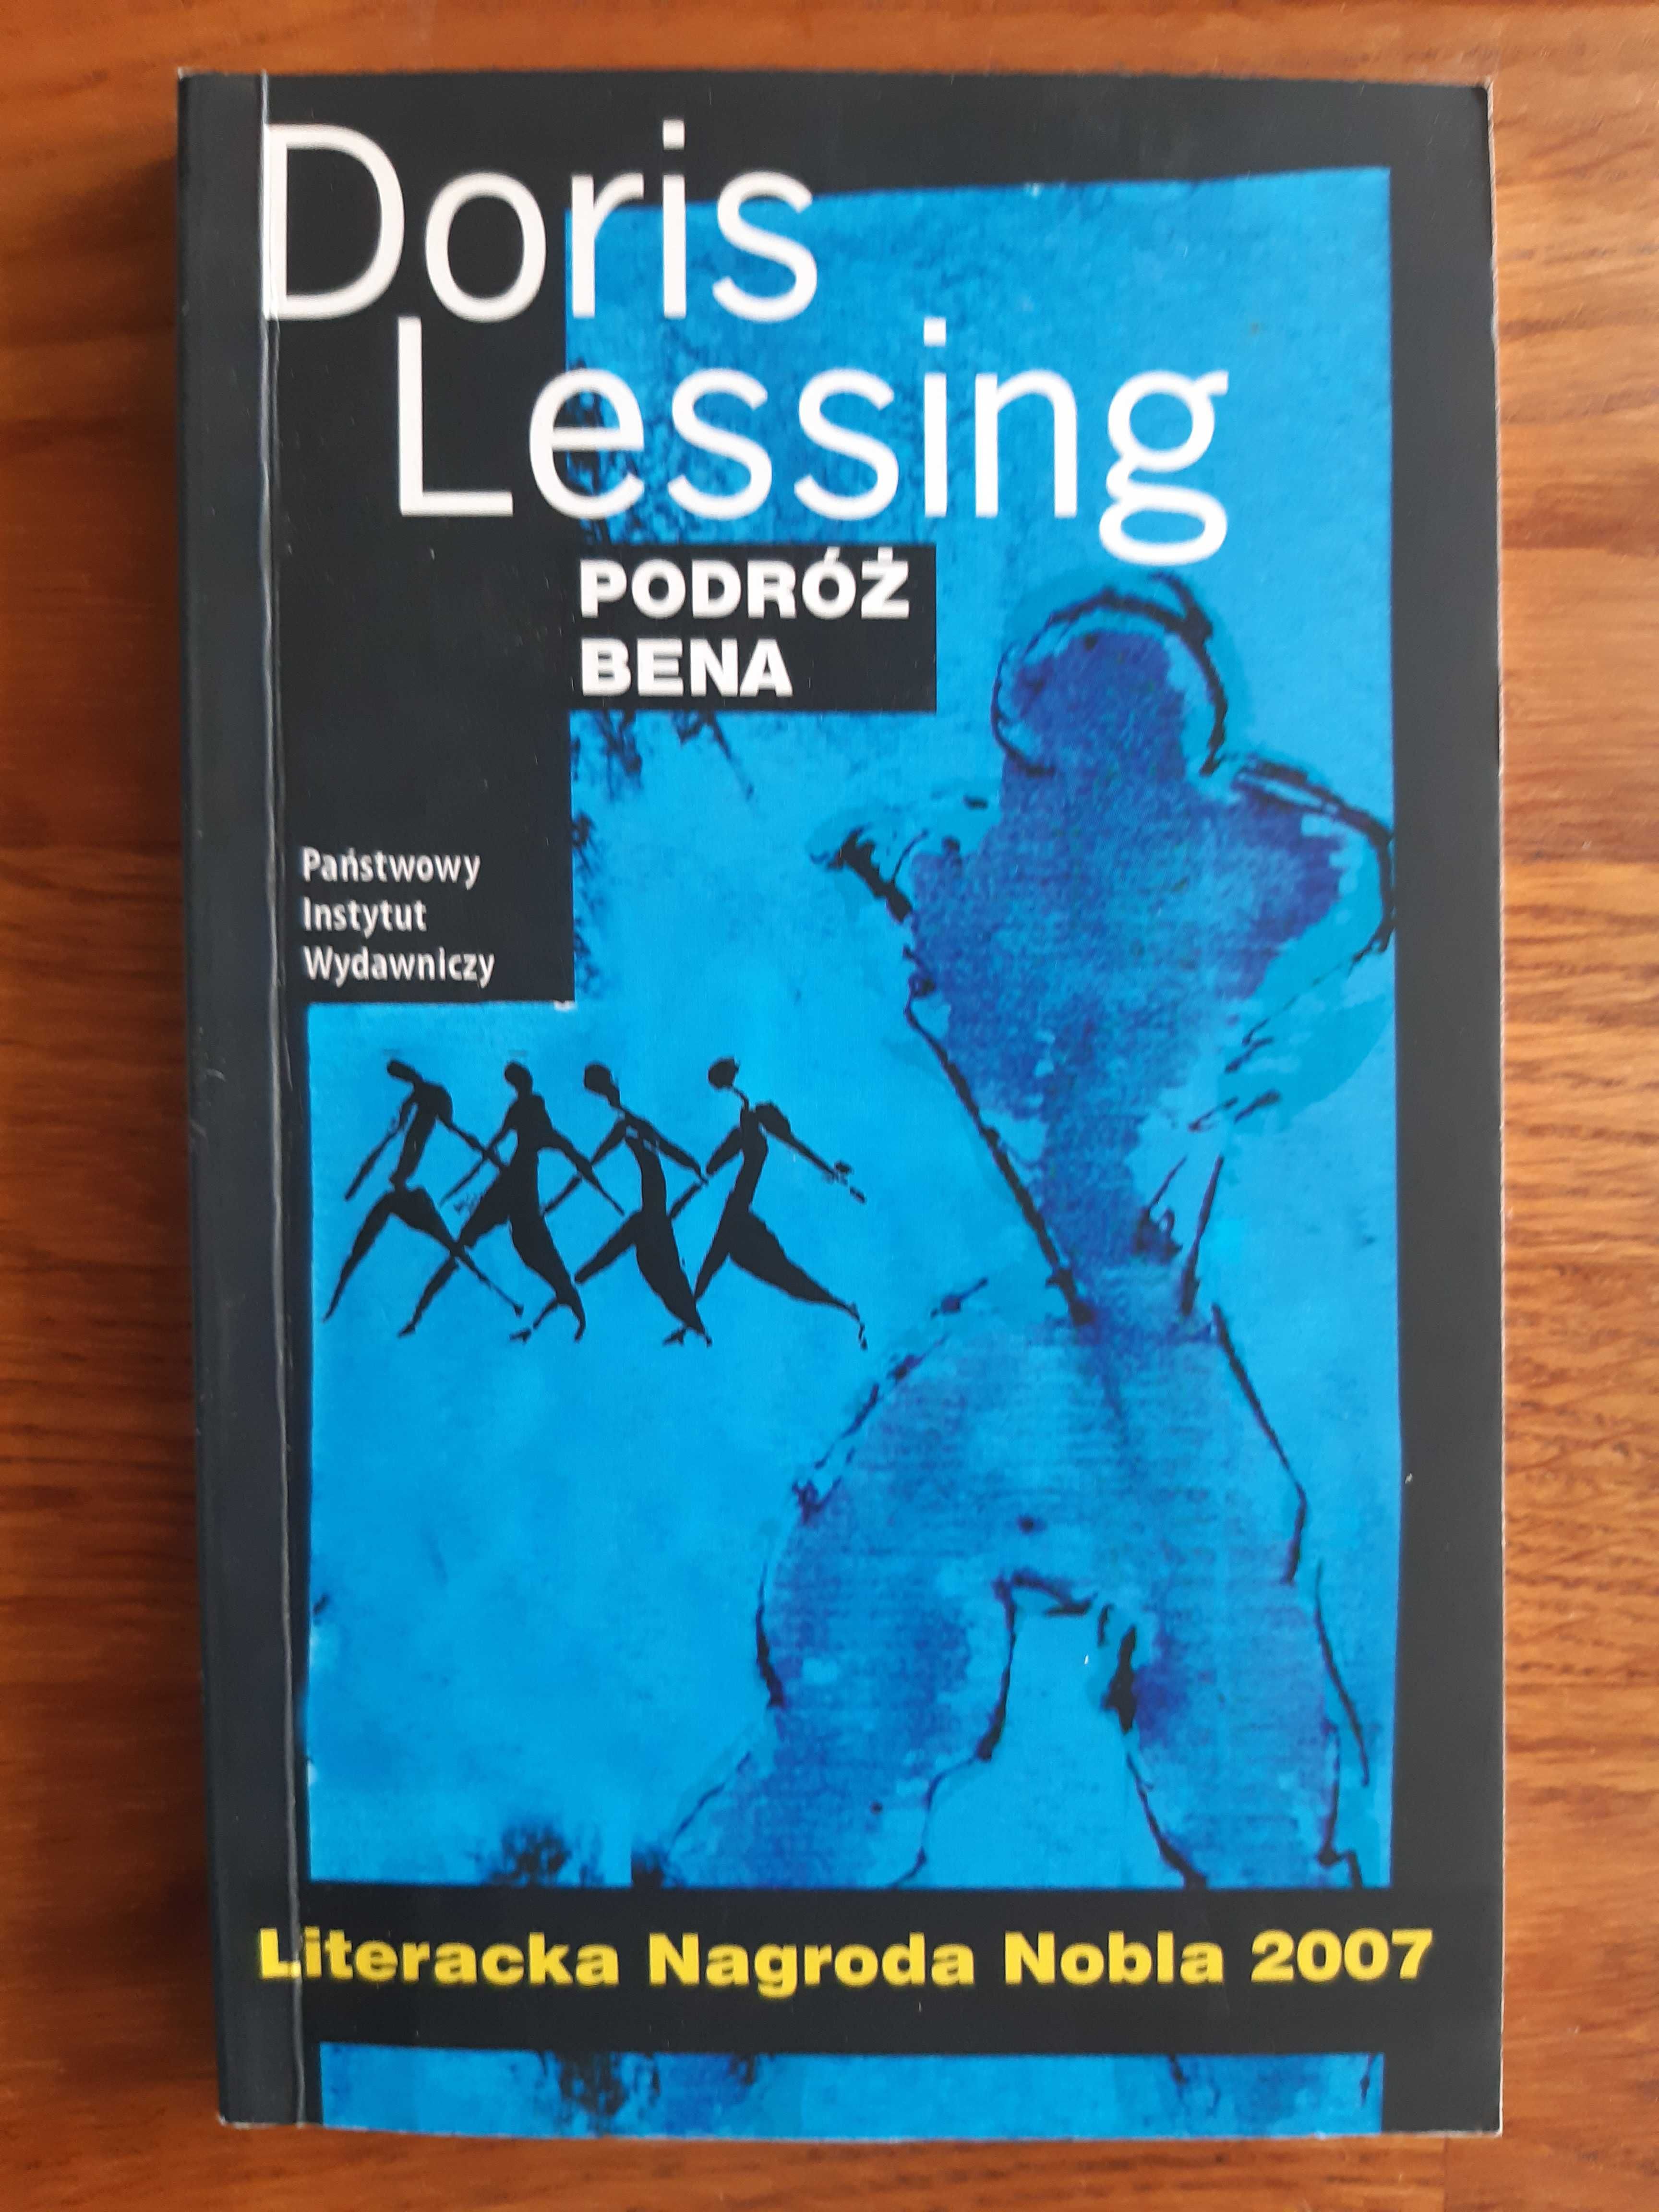 Podróż Bena. Doris Lessing